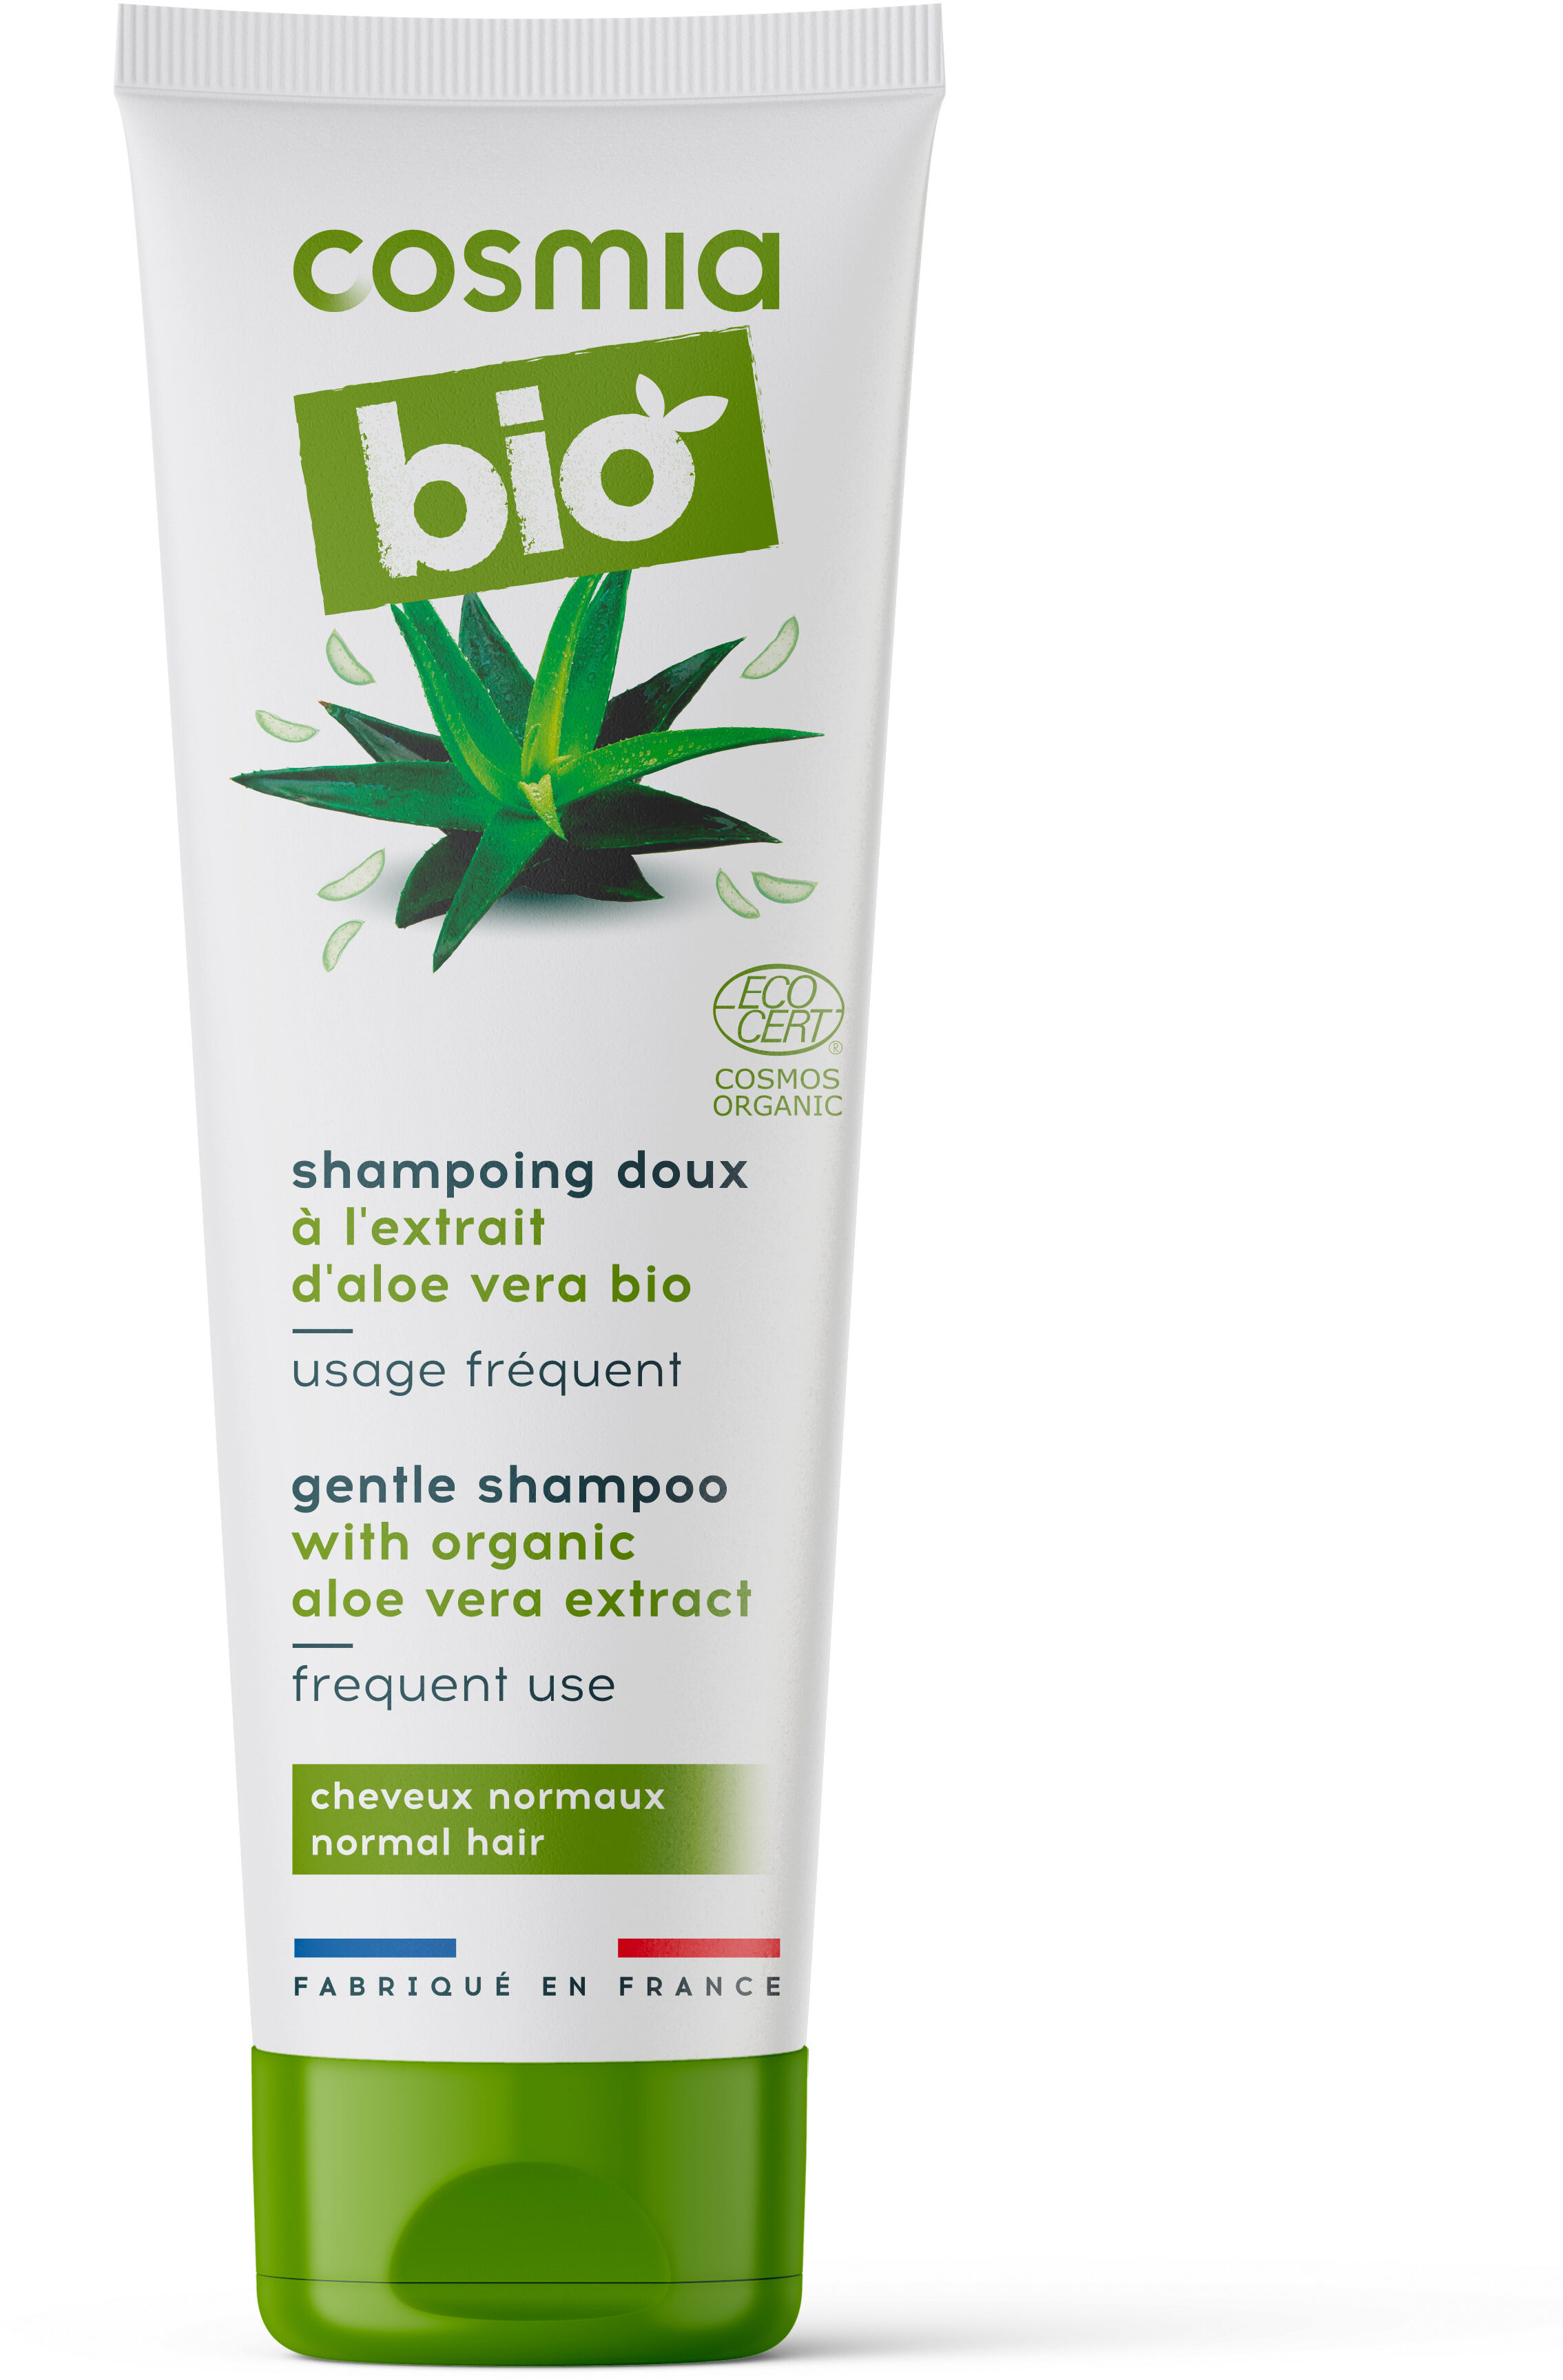 Bio shampoing doux a l'extrait d'aloe vera bio - Product - fr